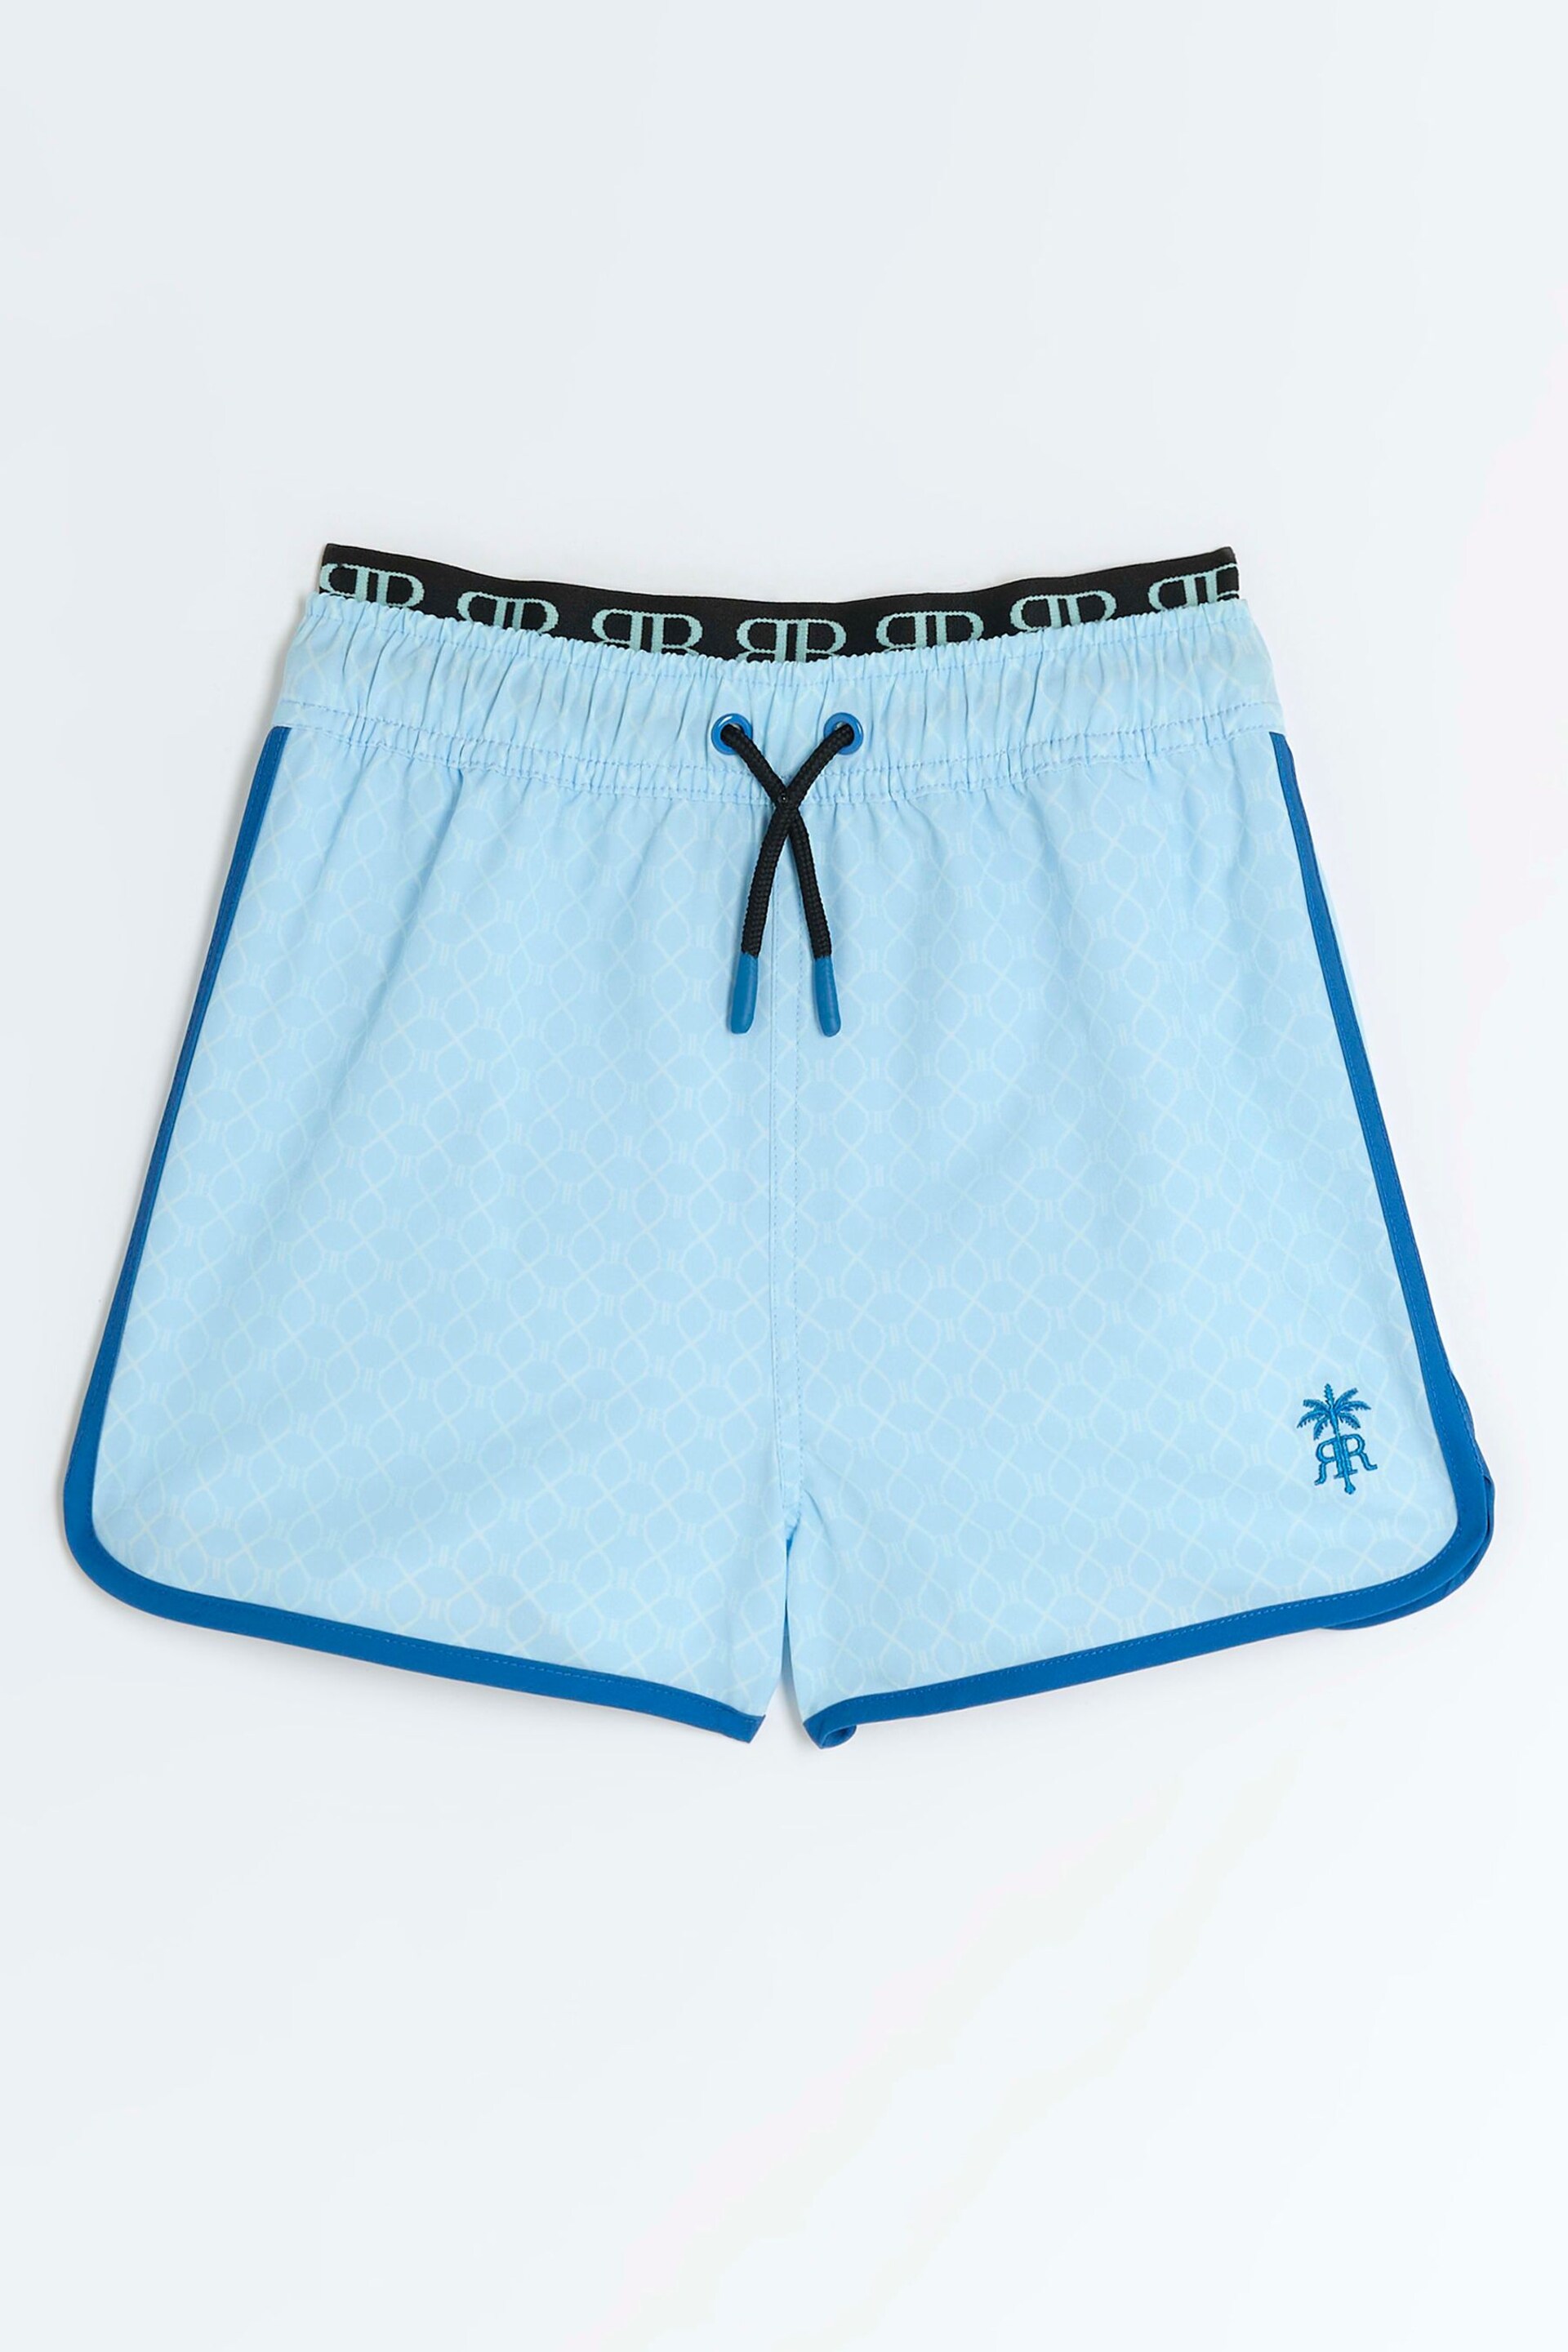 River Island Blue Boys Monogram Swim Shorts - Image 1 of 3